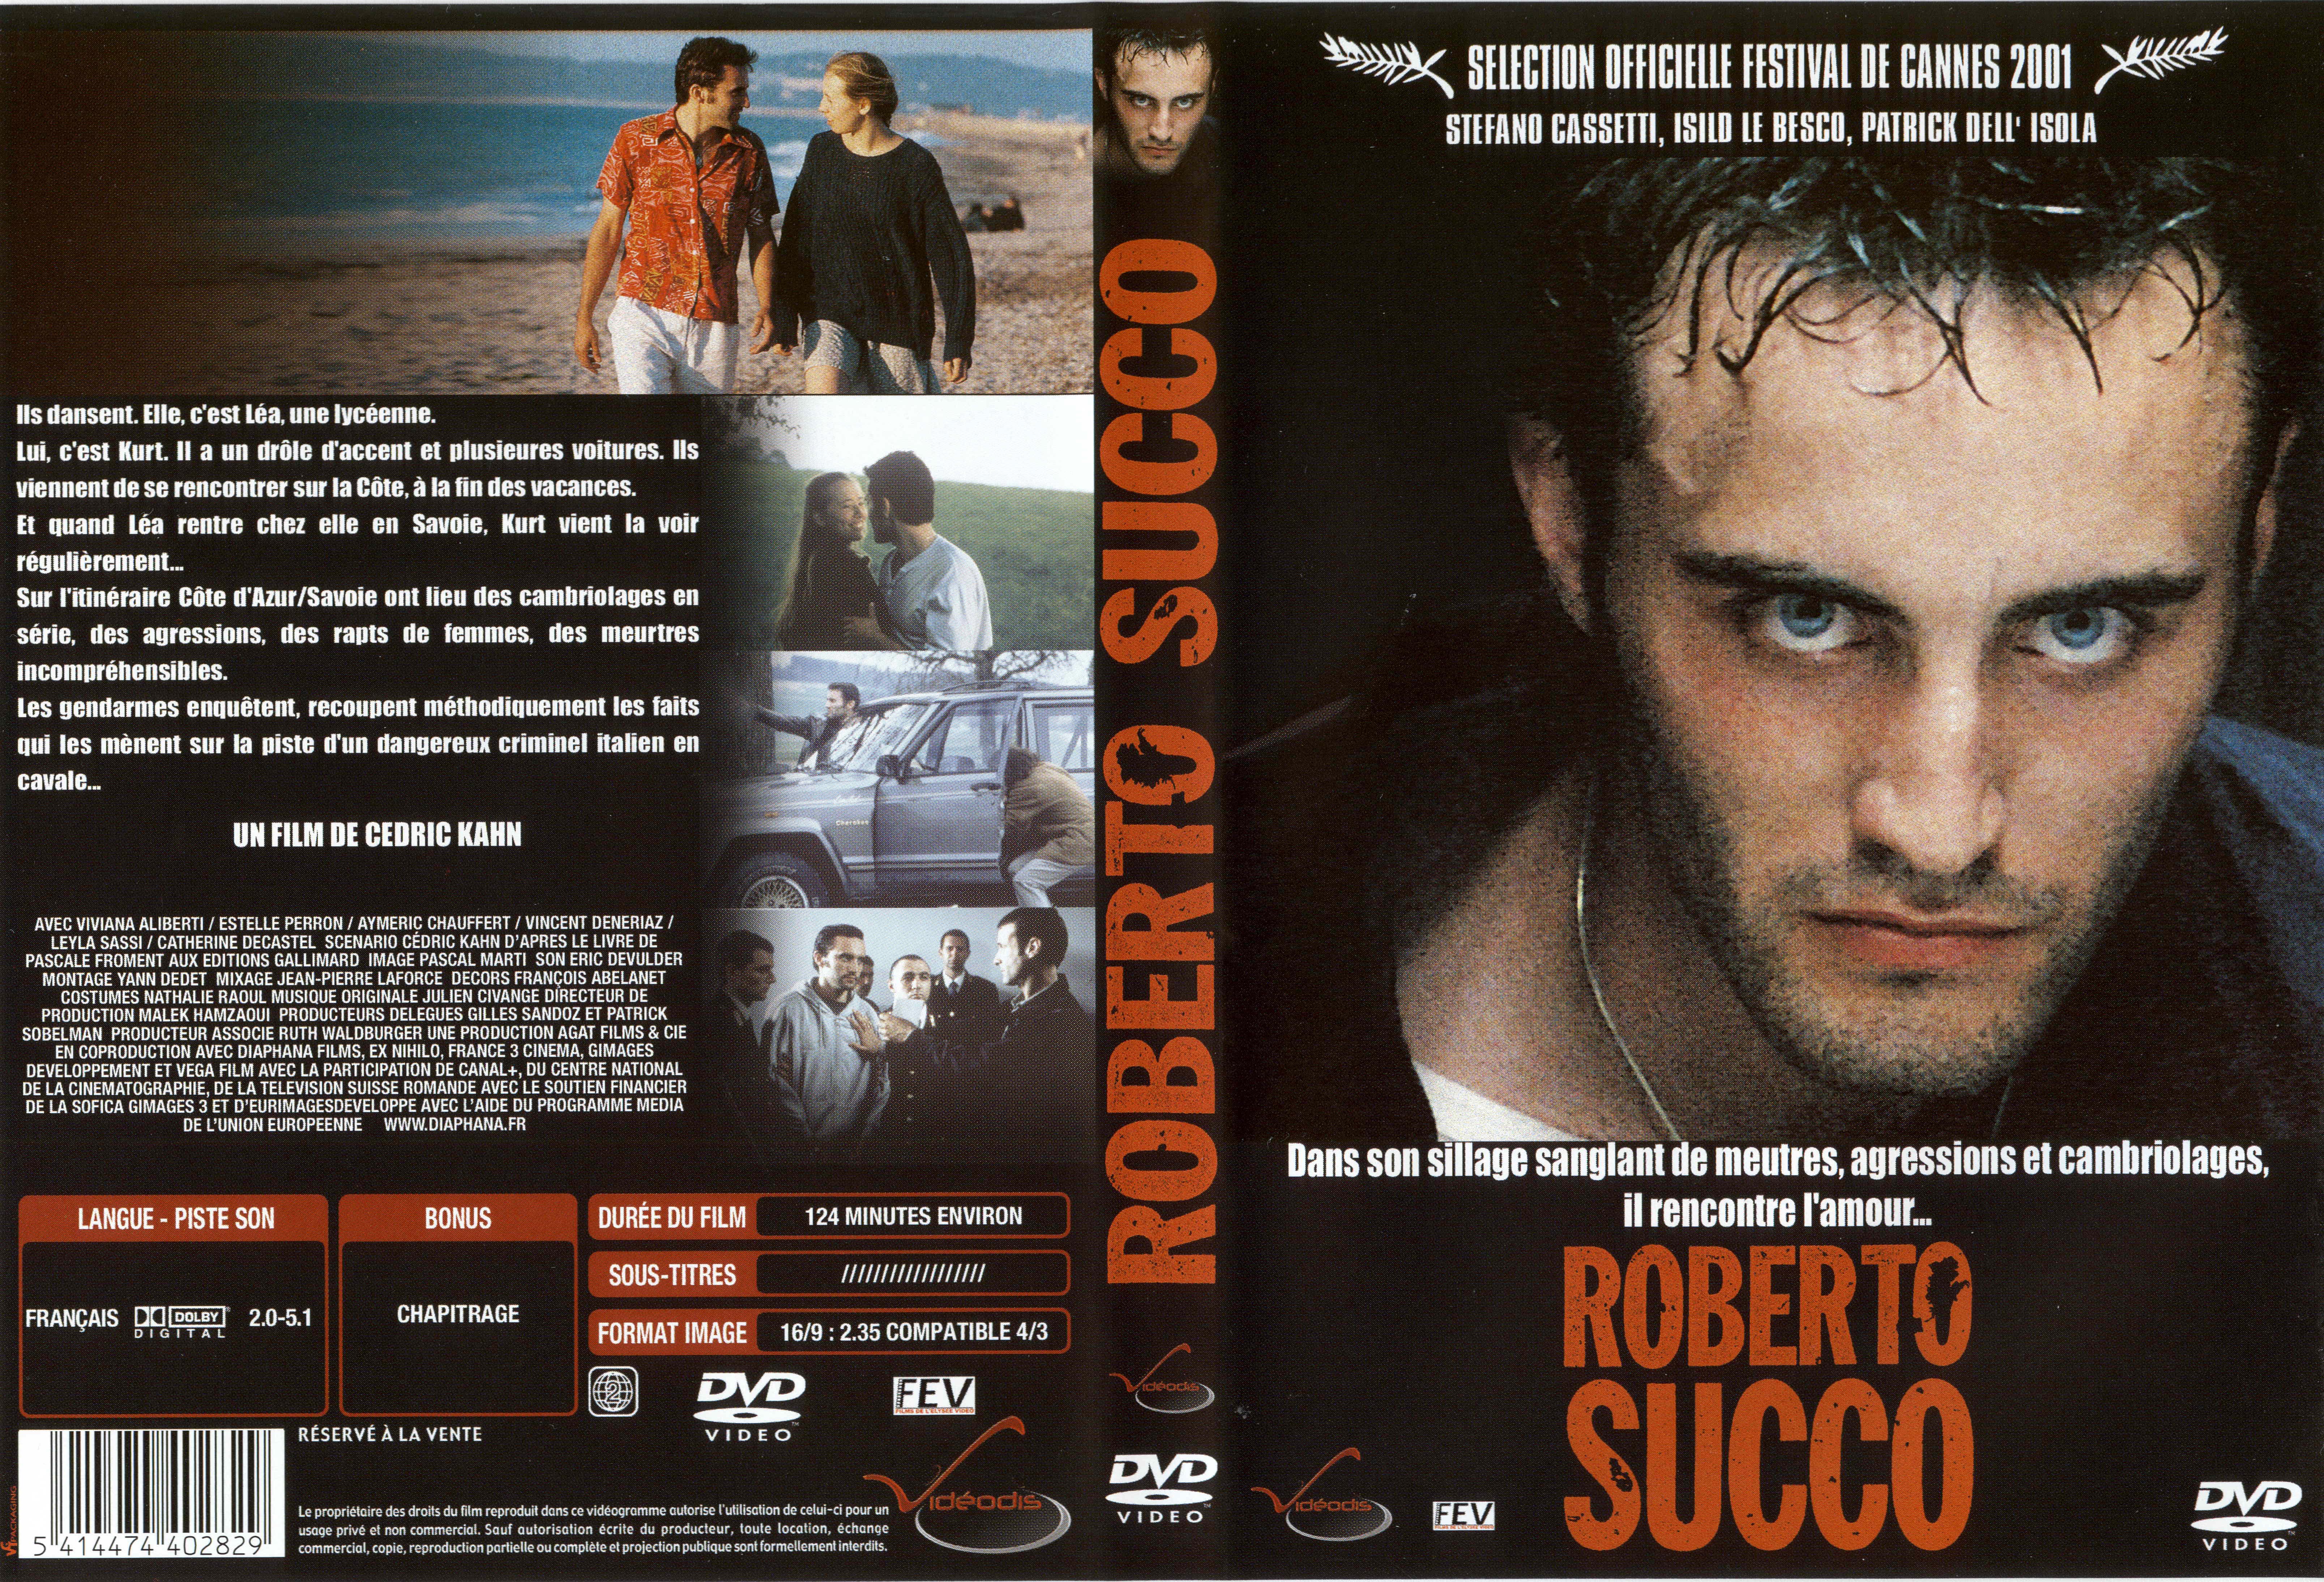 Jaquette DVD Roberto Succo v3